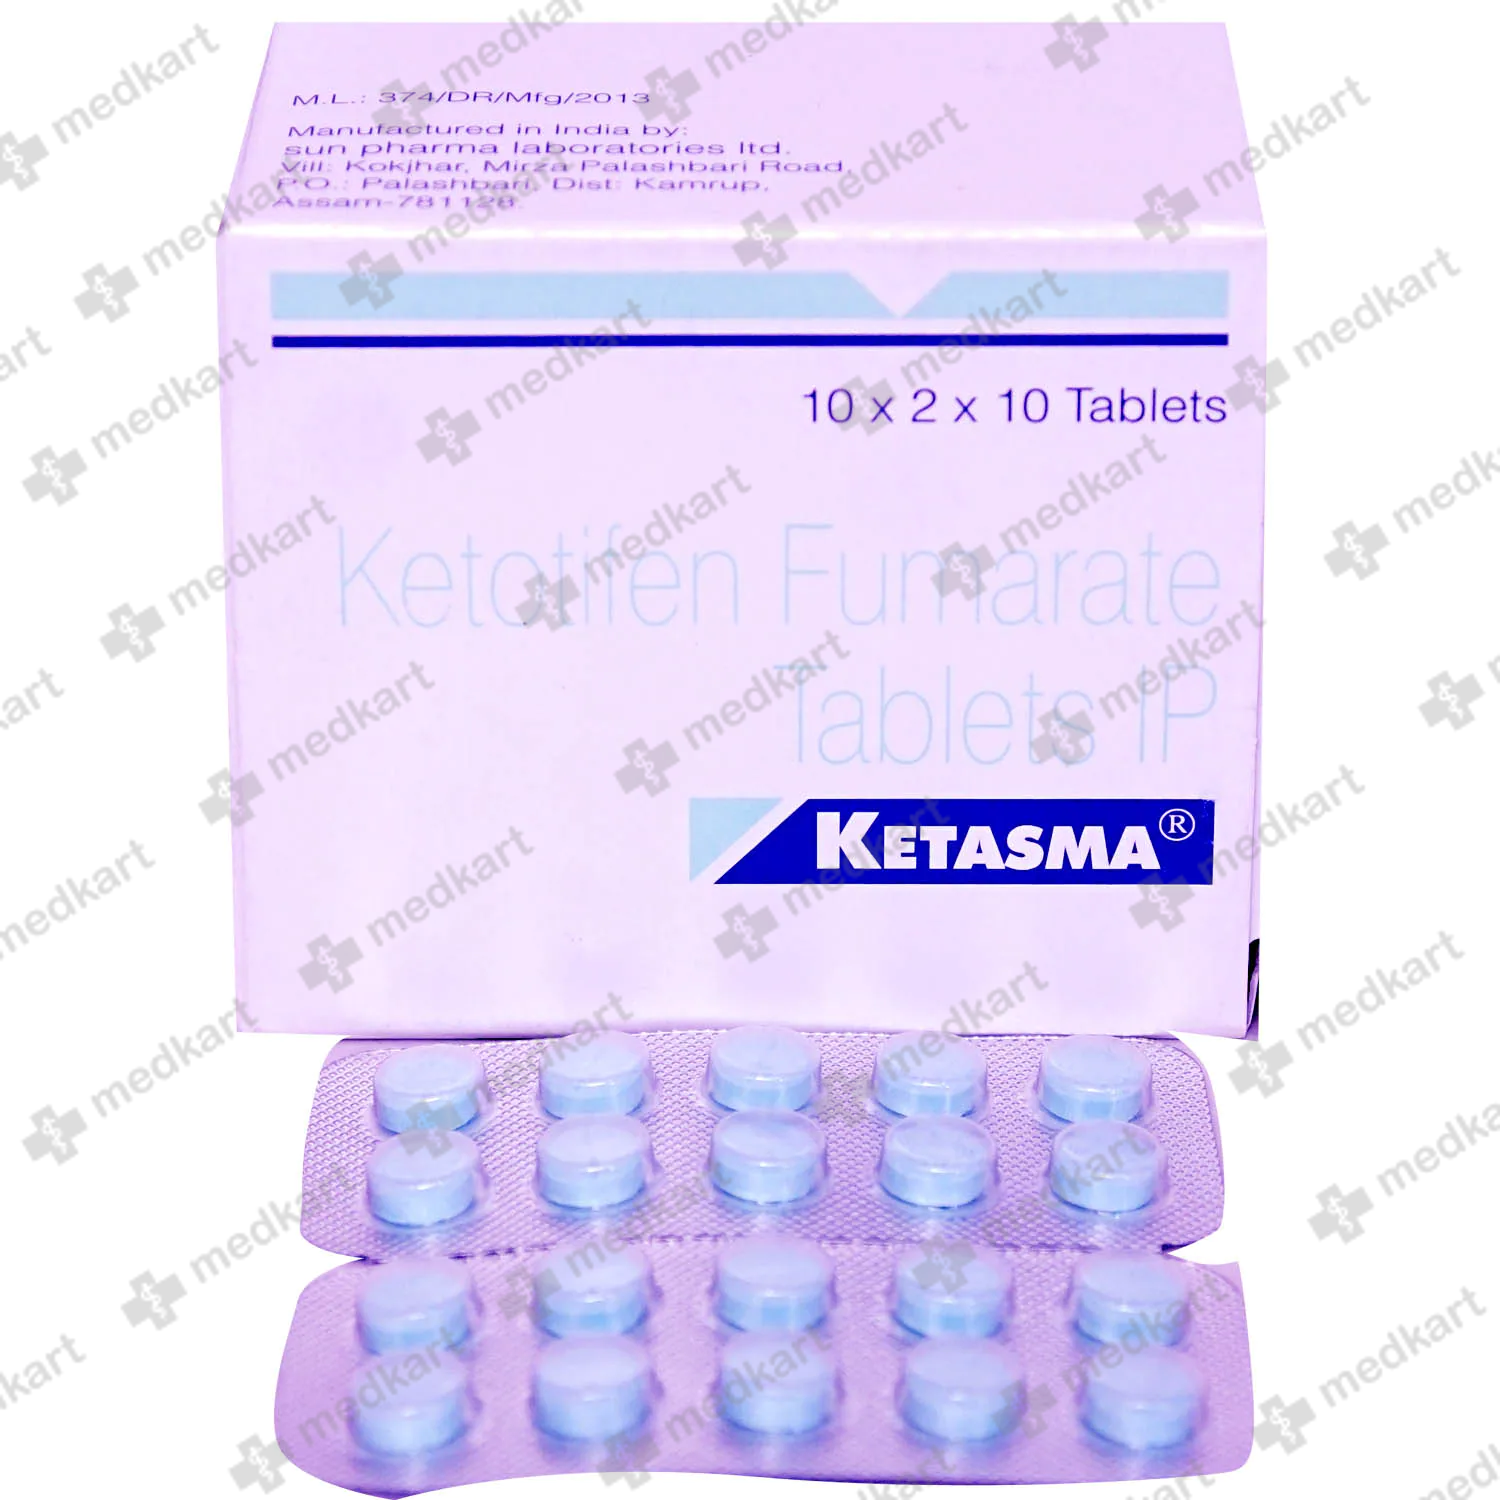 ketasma-1mg-tablet-10s